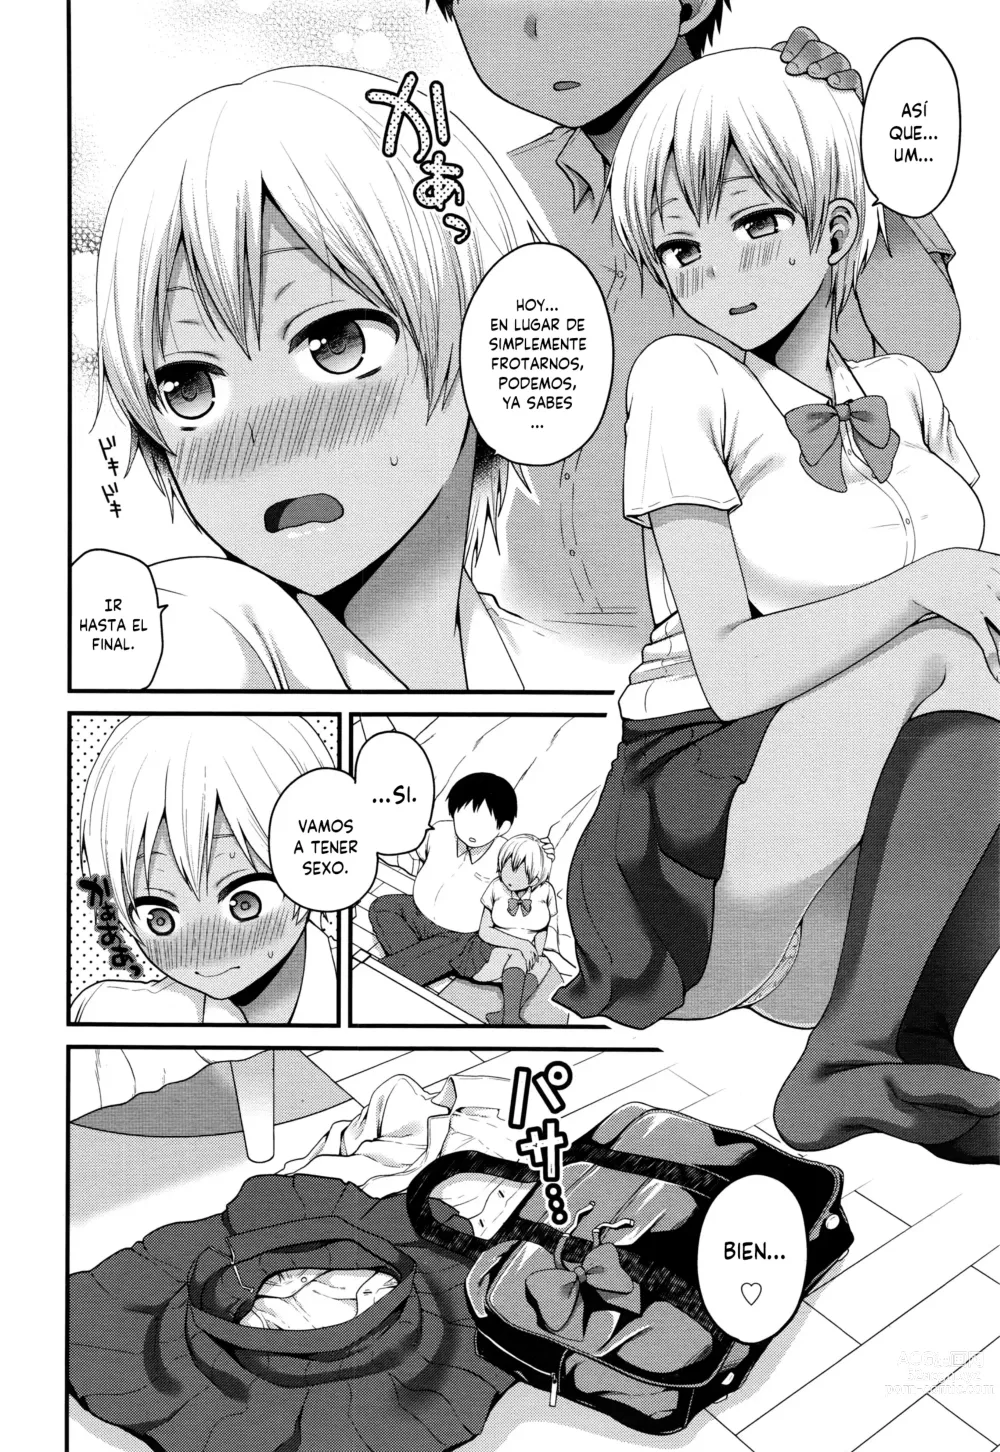 Page 8 of manga Juego Sexual ♥ Intercrural